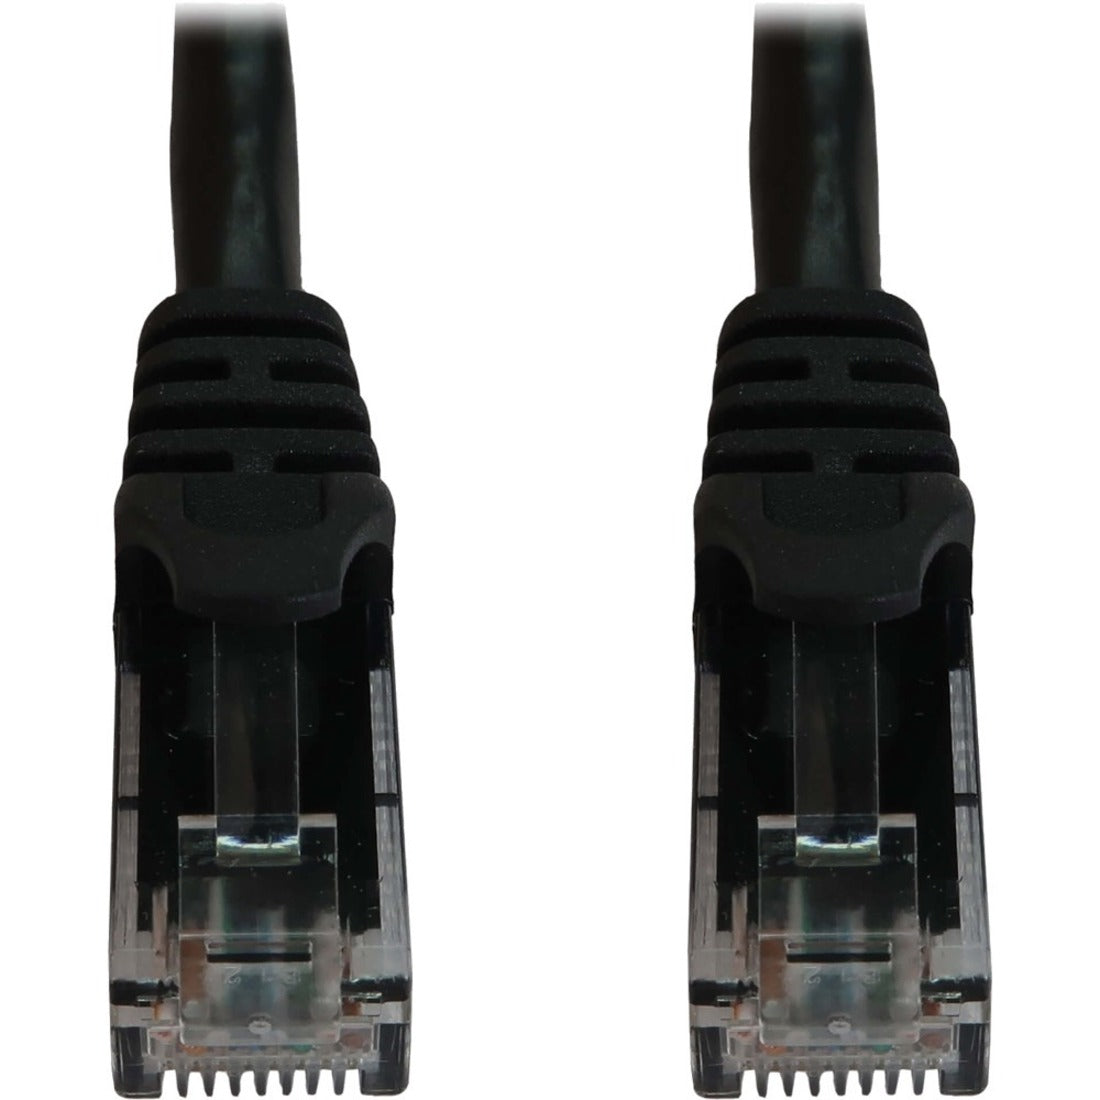 Tripp Lite N261-050-BK Cat.6a UTP Network Cable, 10G PoE, Snagless Molded, Black 50ft